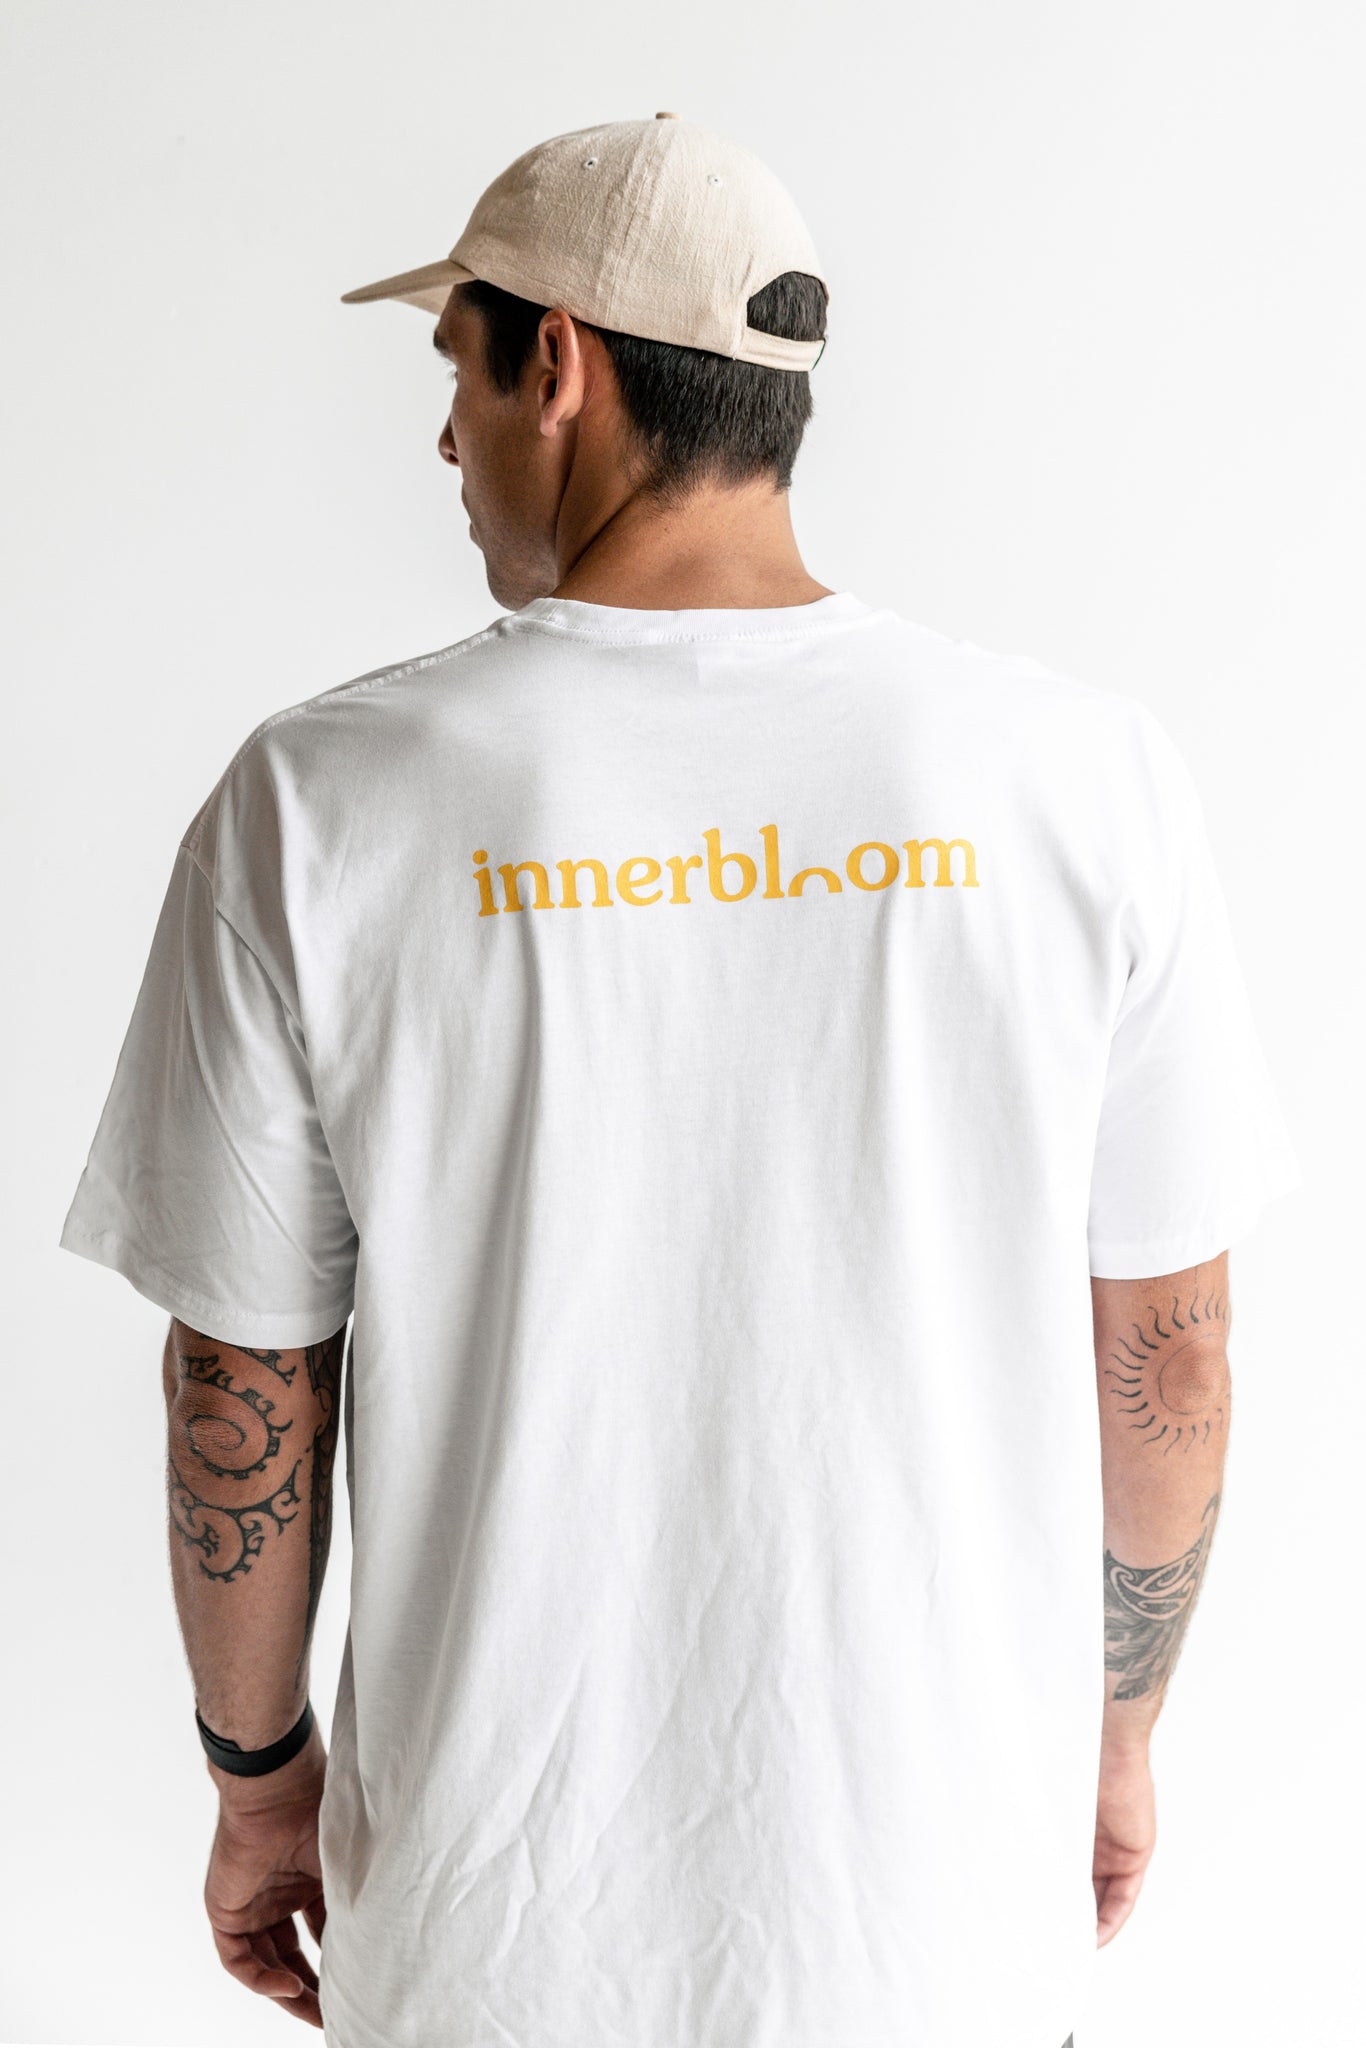 Innerbloom Concept Design Tee – Innerbloom Cold Brew Coffee